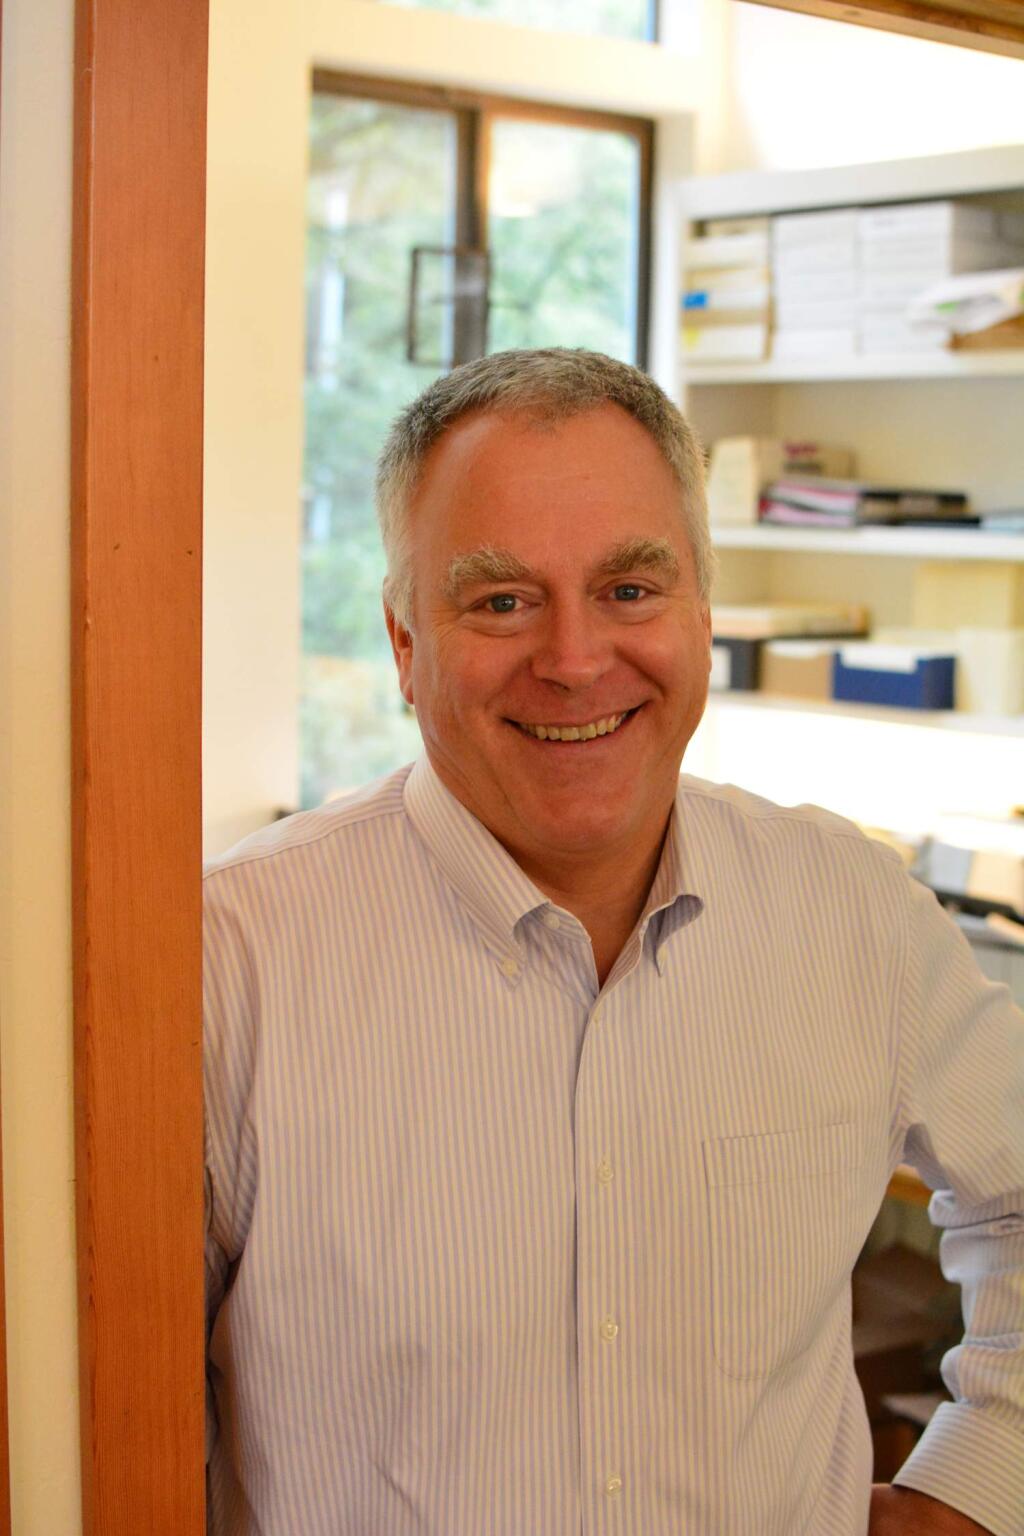 Scott Hafner is chair of Sonoma Land Trust’s board of directors.